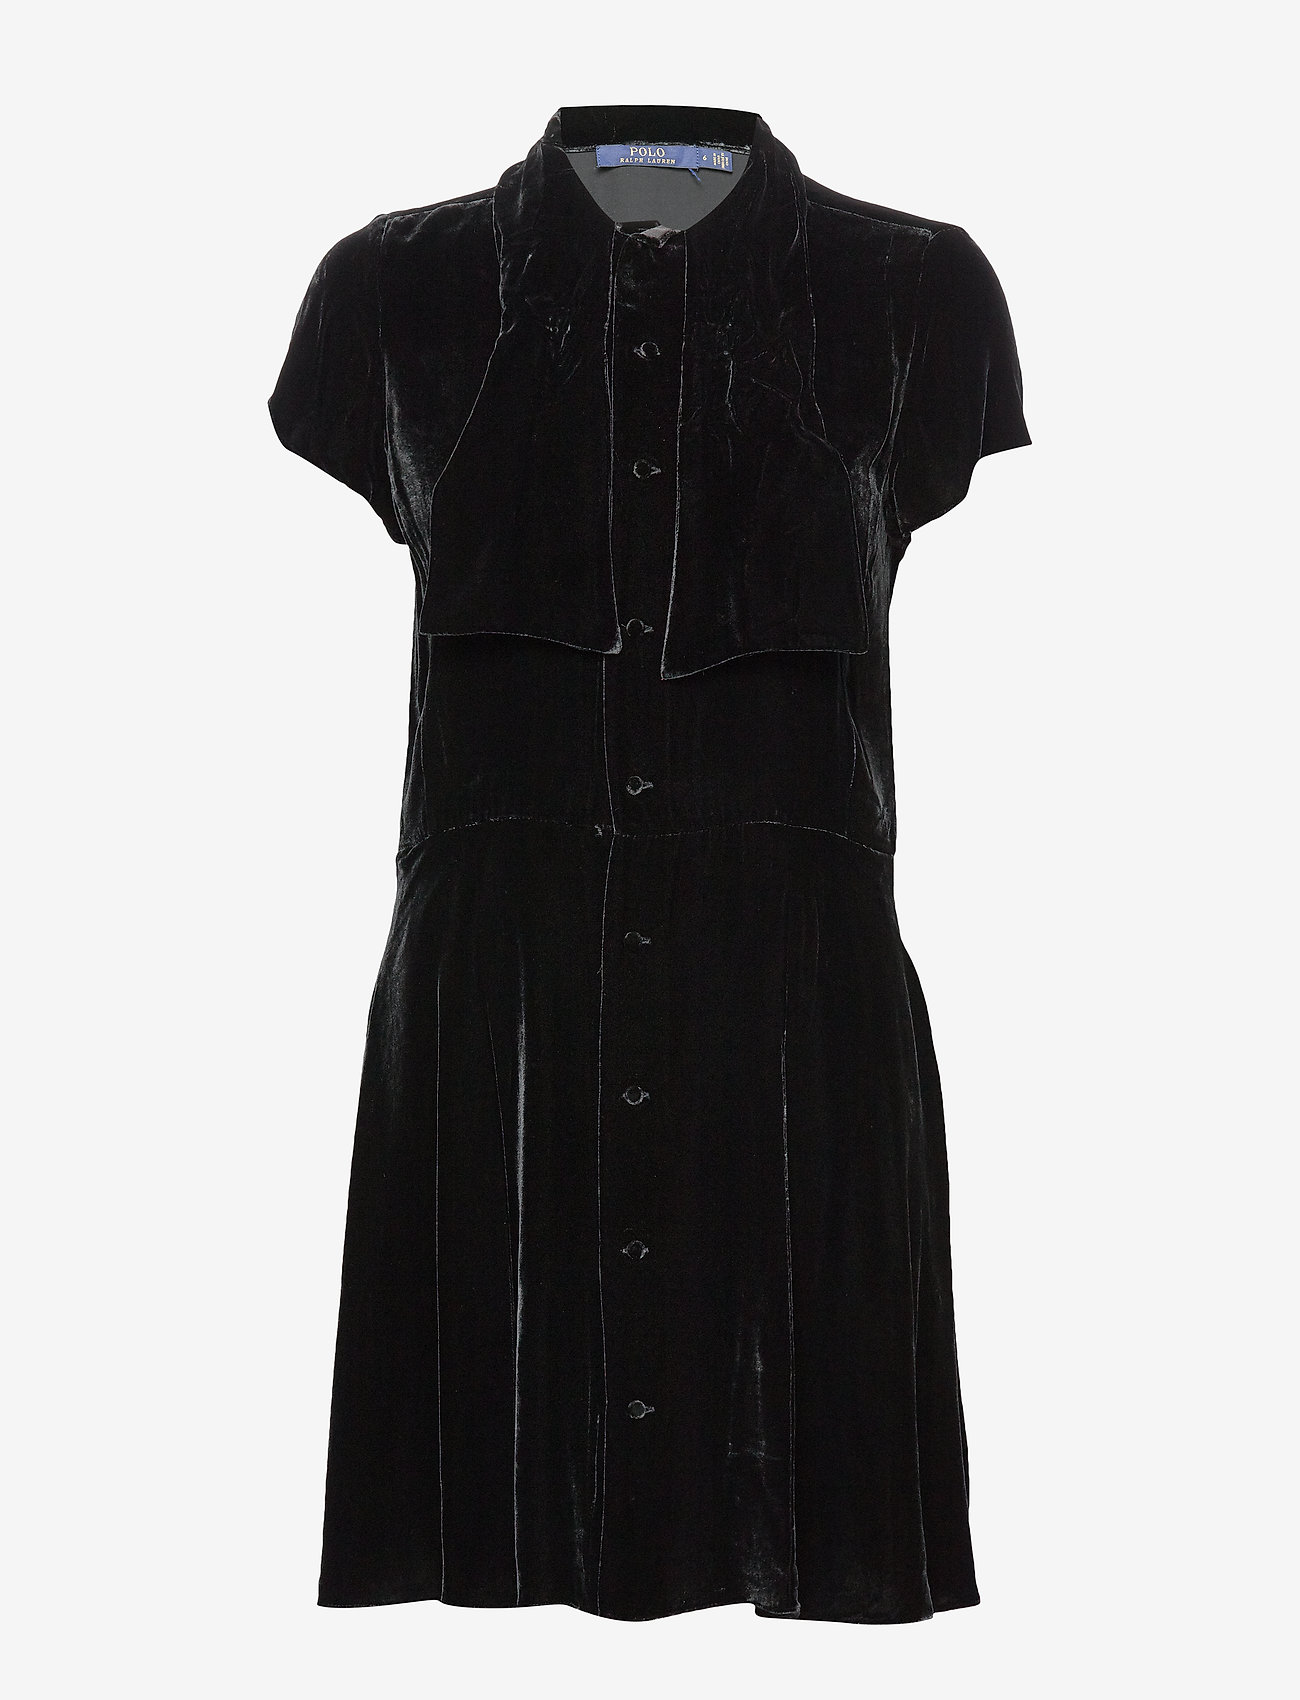 ralph lauren black dress